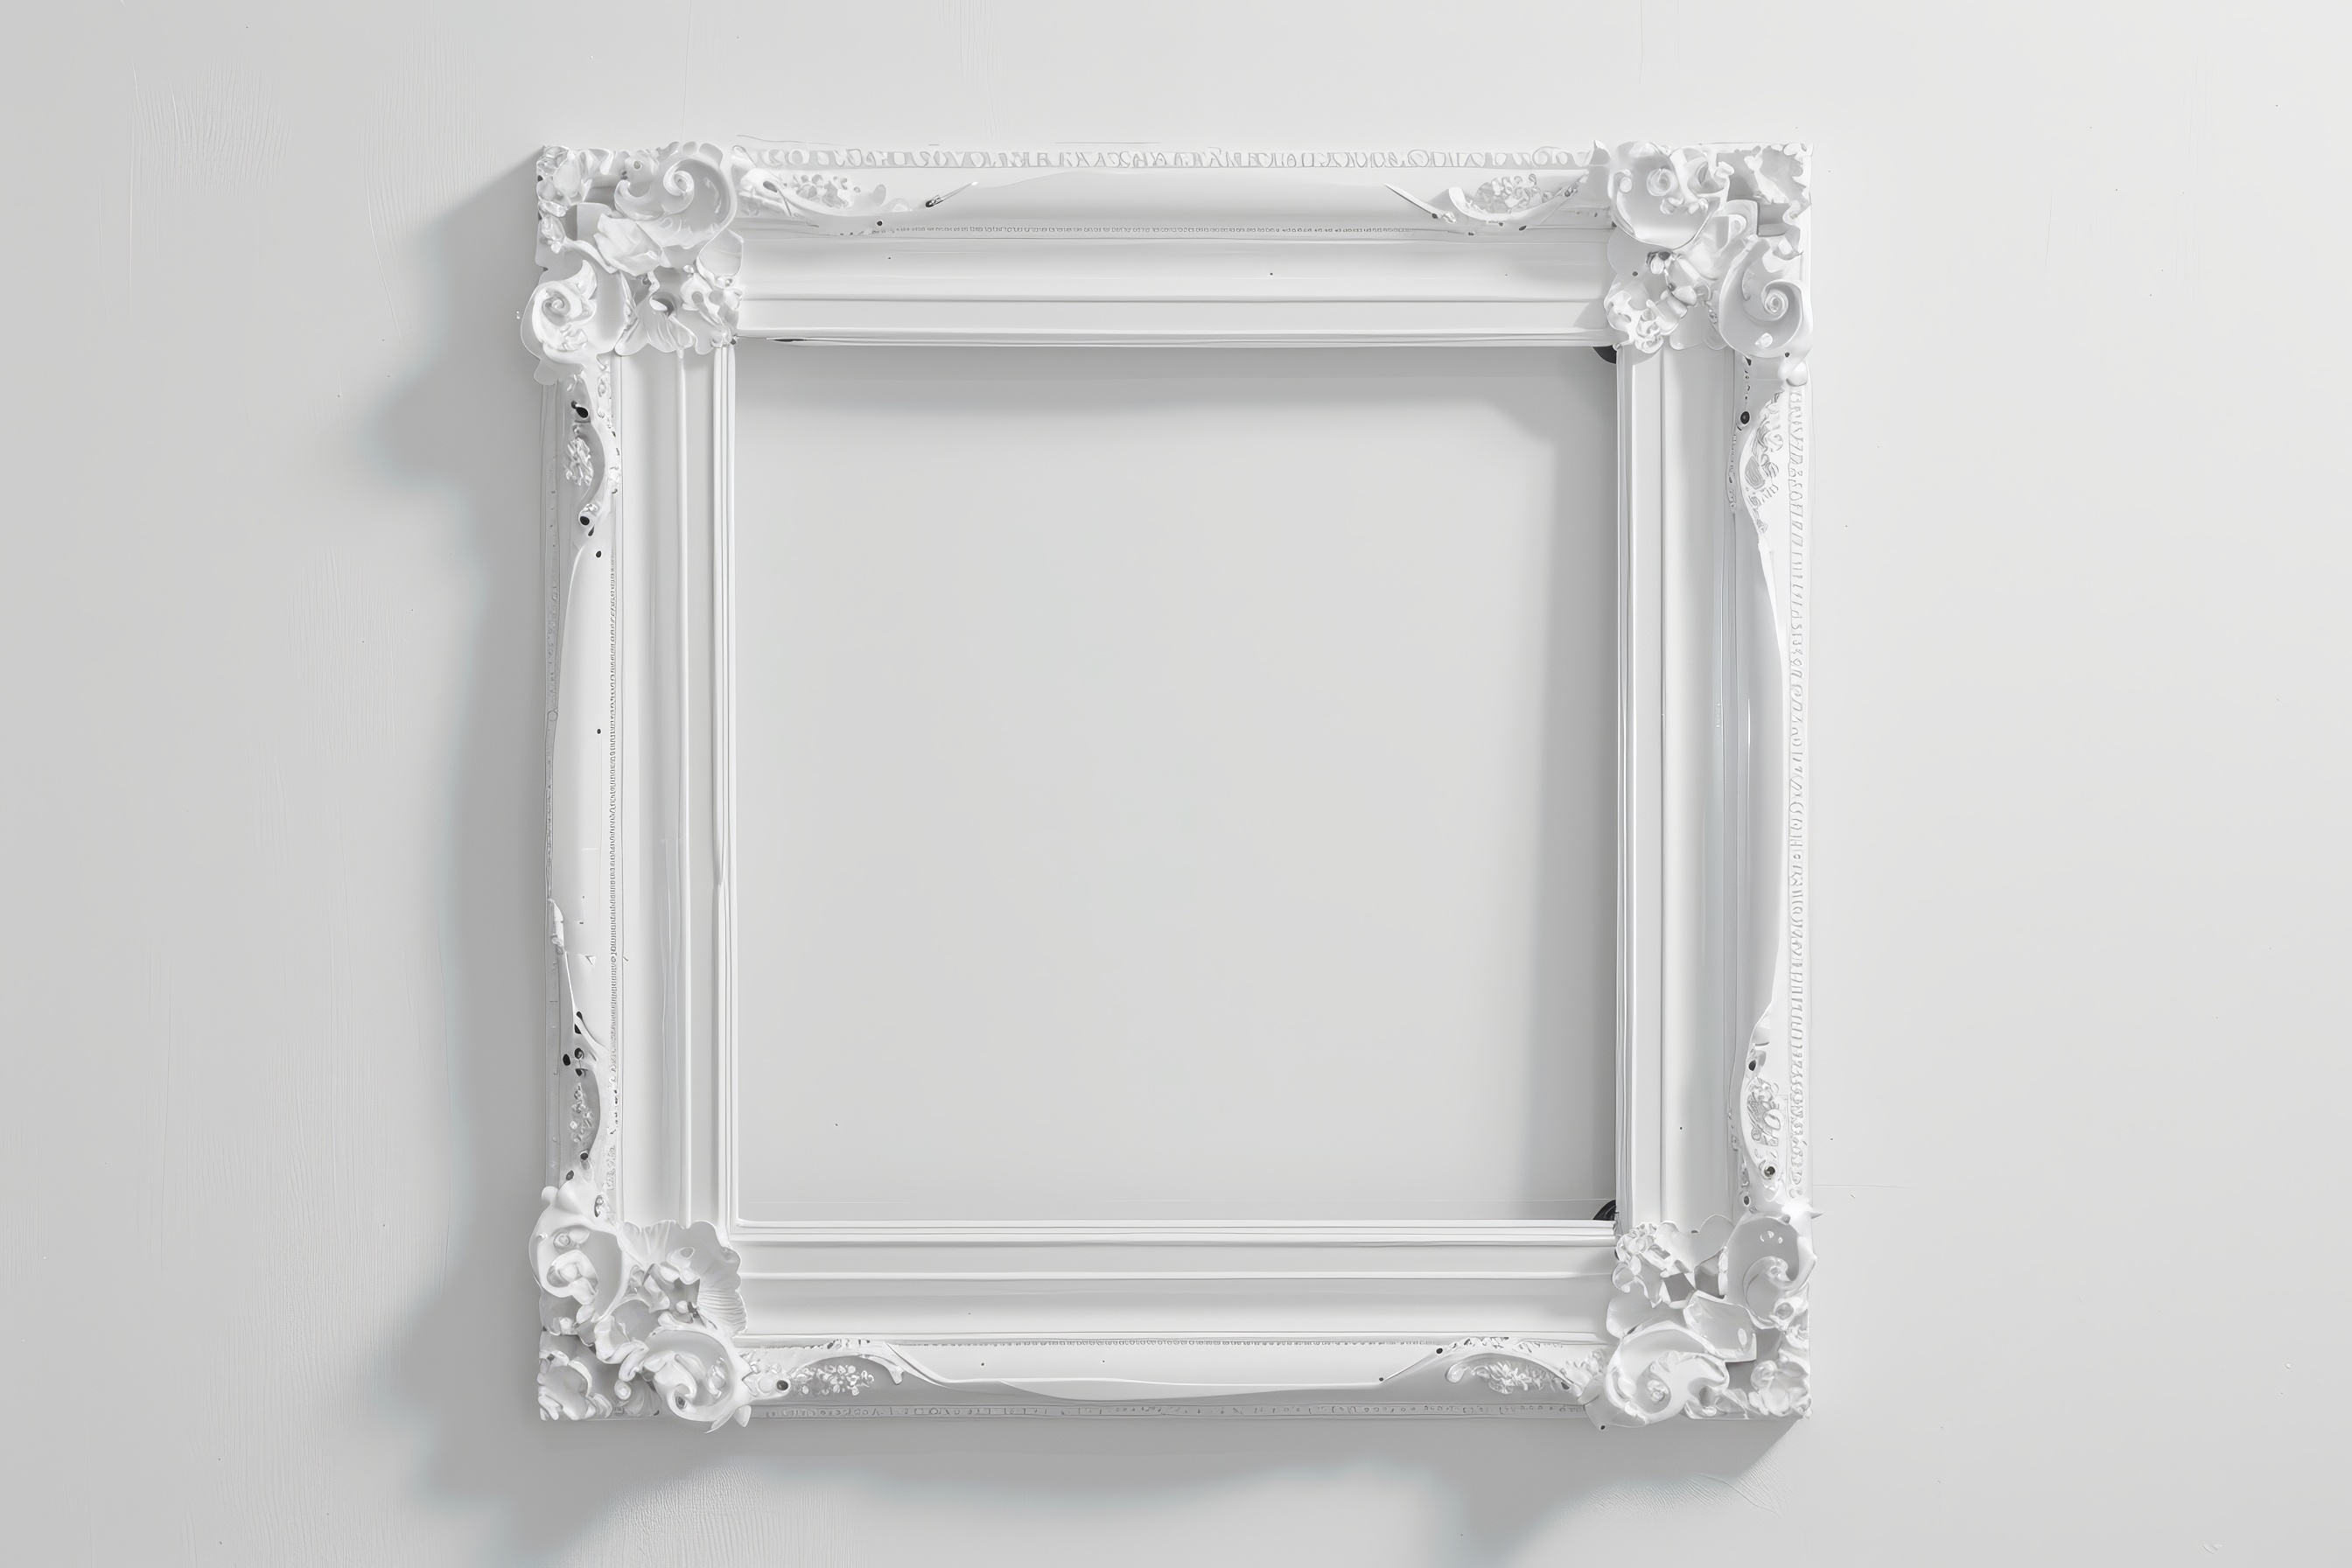 Vintage wooden frame on white background